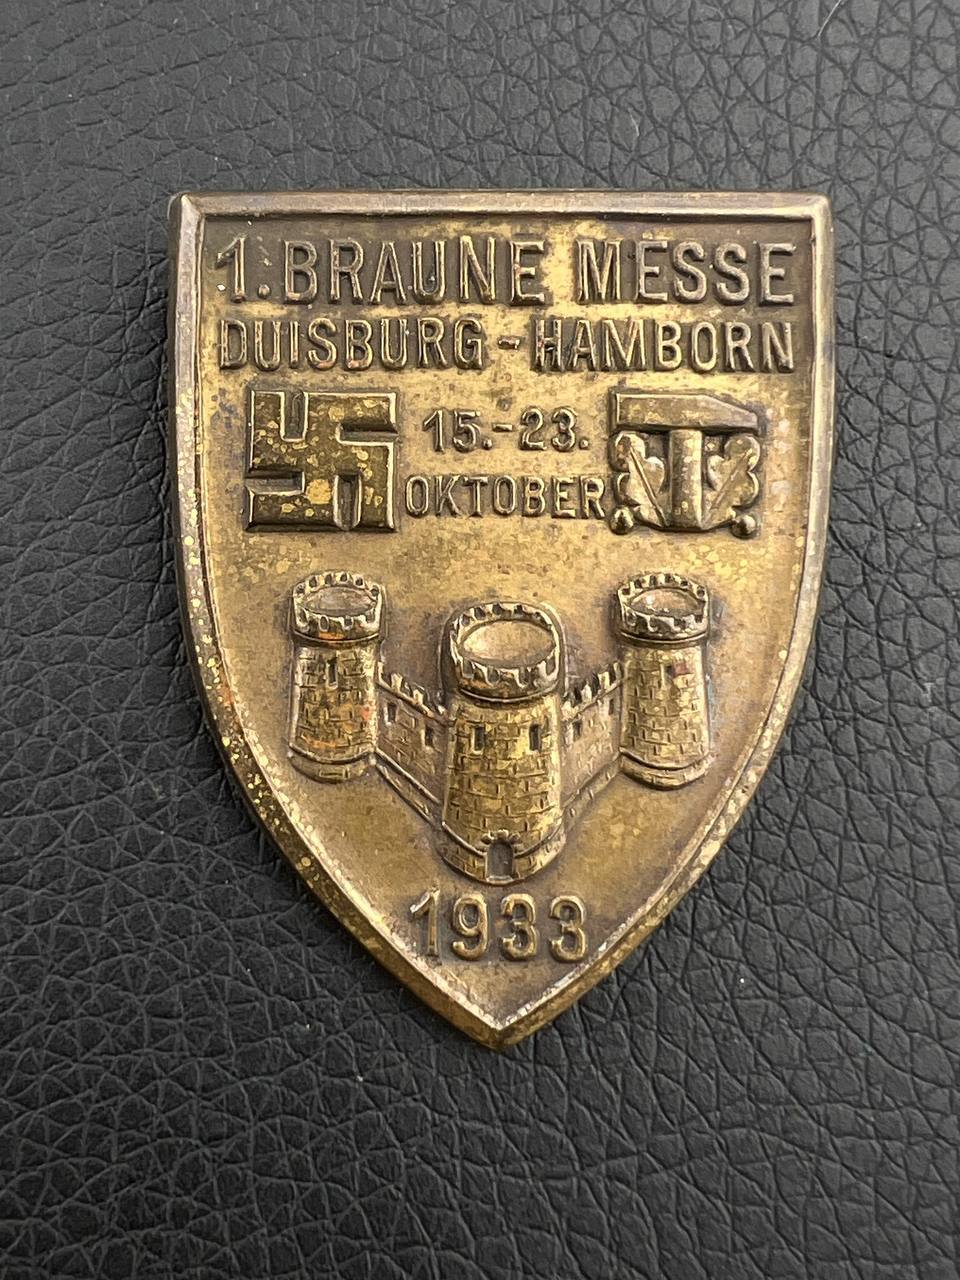 Значок 1. Braune Messe Duisburg-Hamborn 1933 от Алексей С.